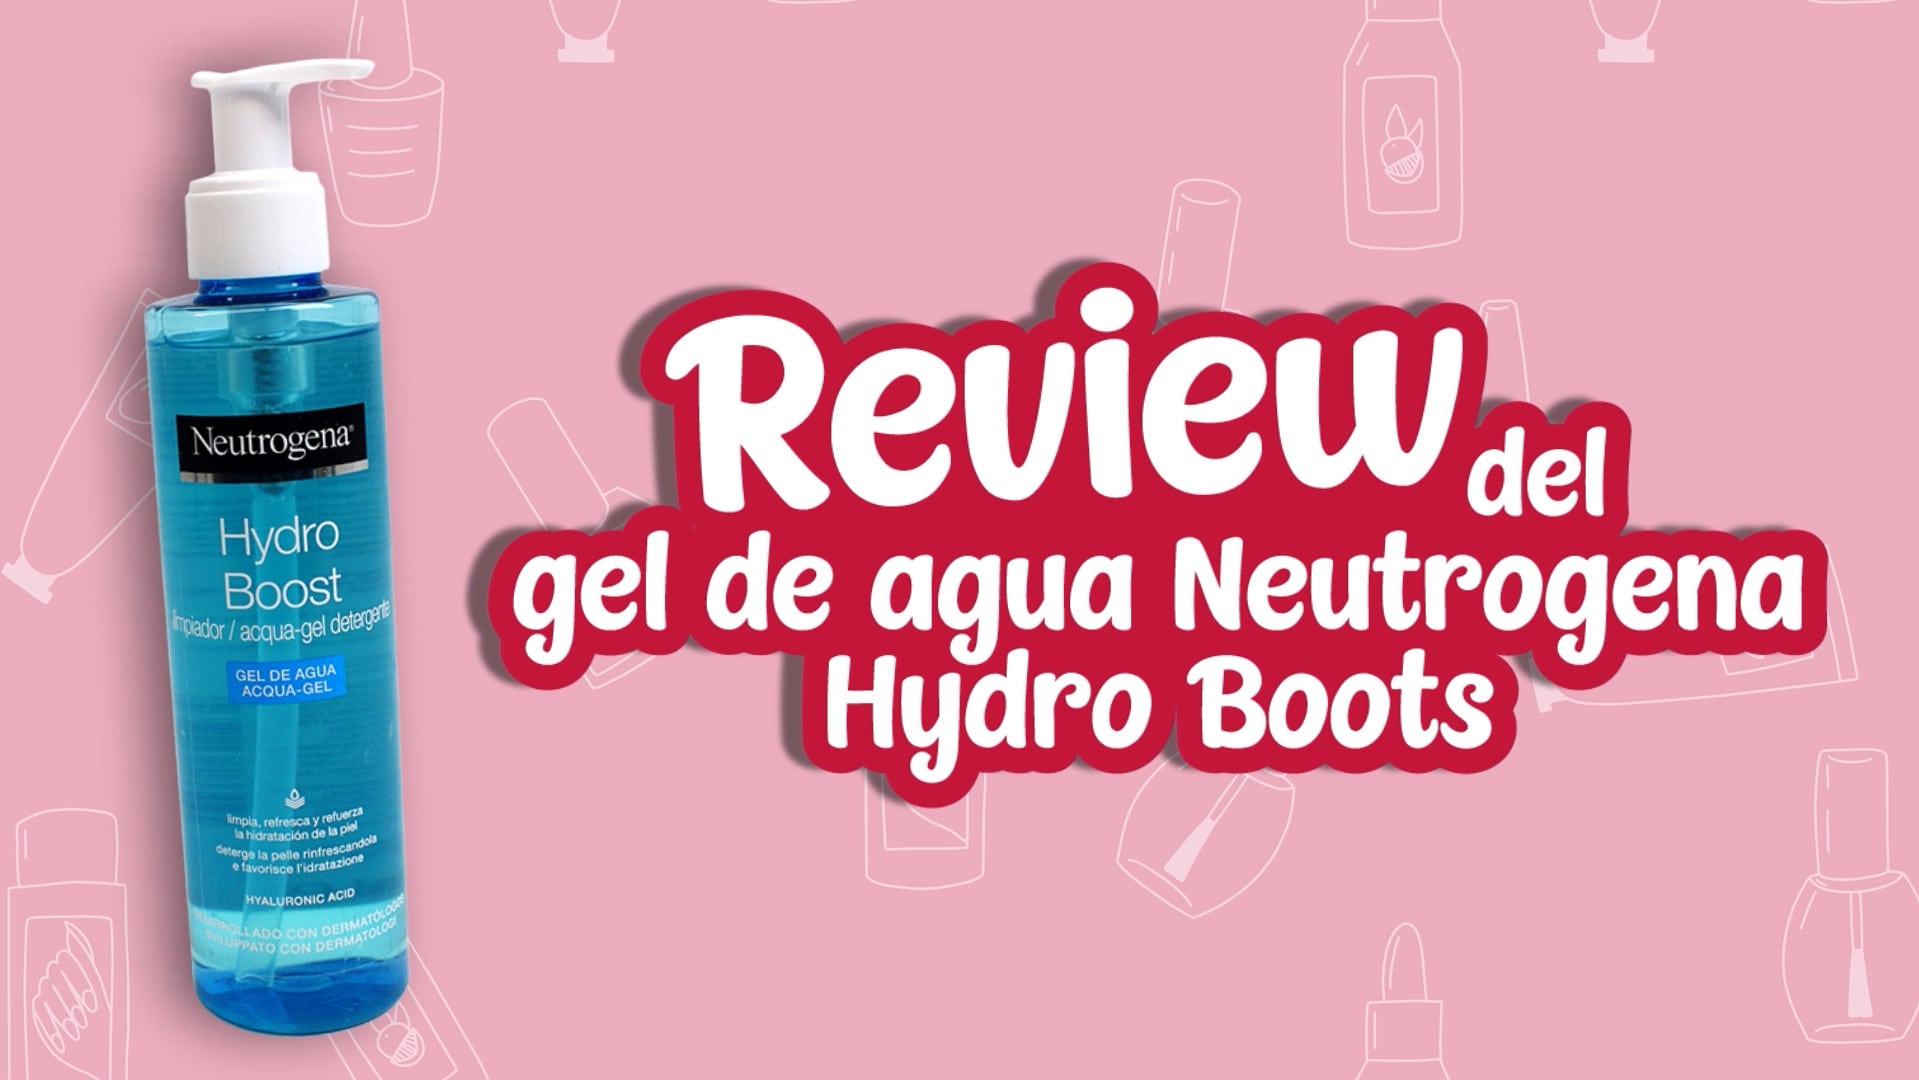 Opiniones de Neutrogena Hydro Boost gel de agua - Review de Neutrogena Hydro Boost gel de agua